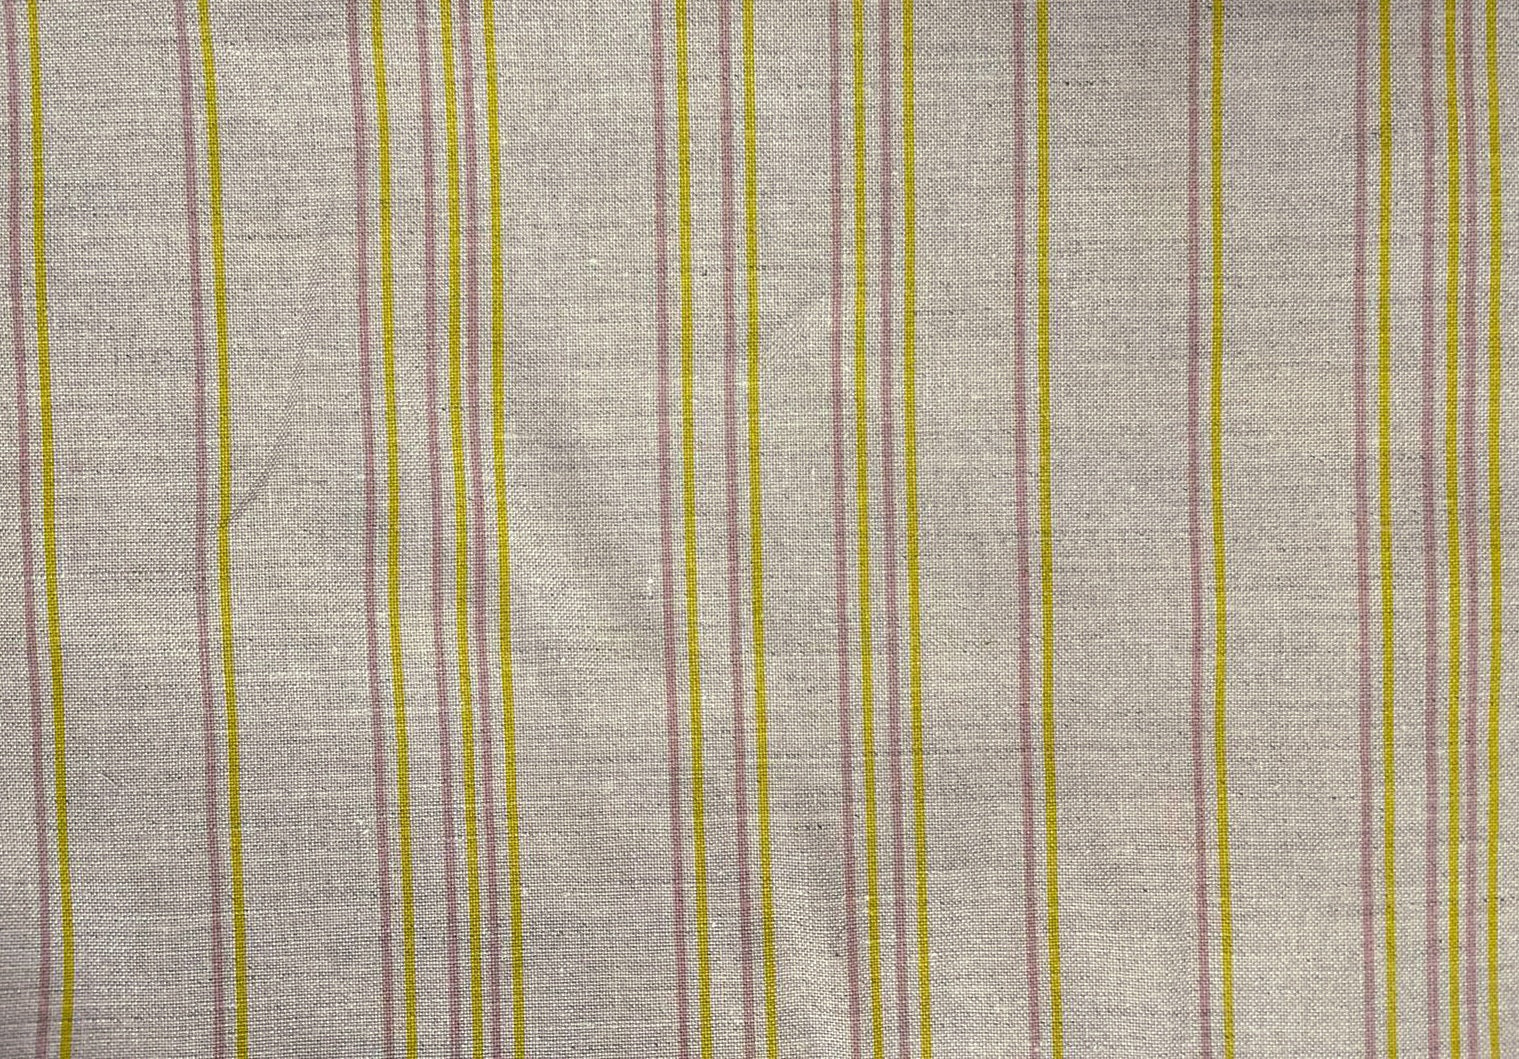 Narrow Stripes on Linen